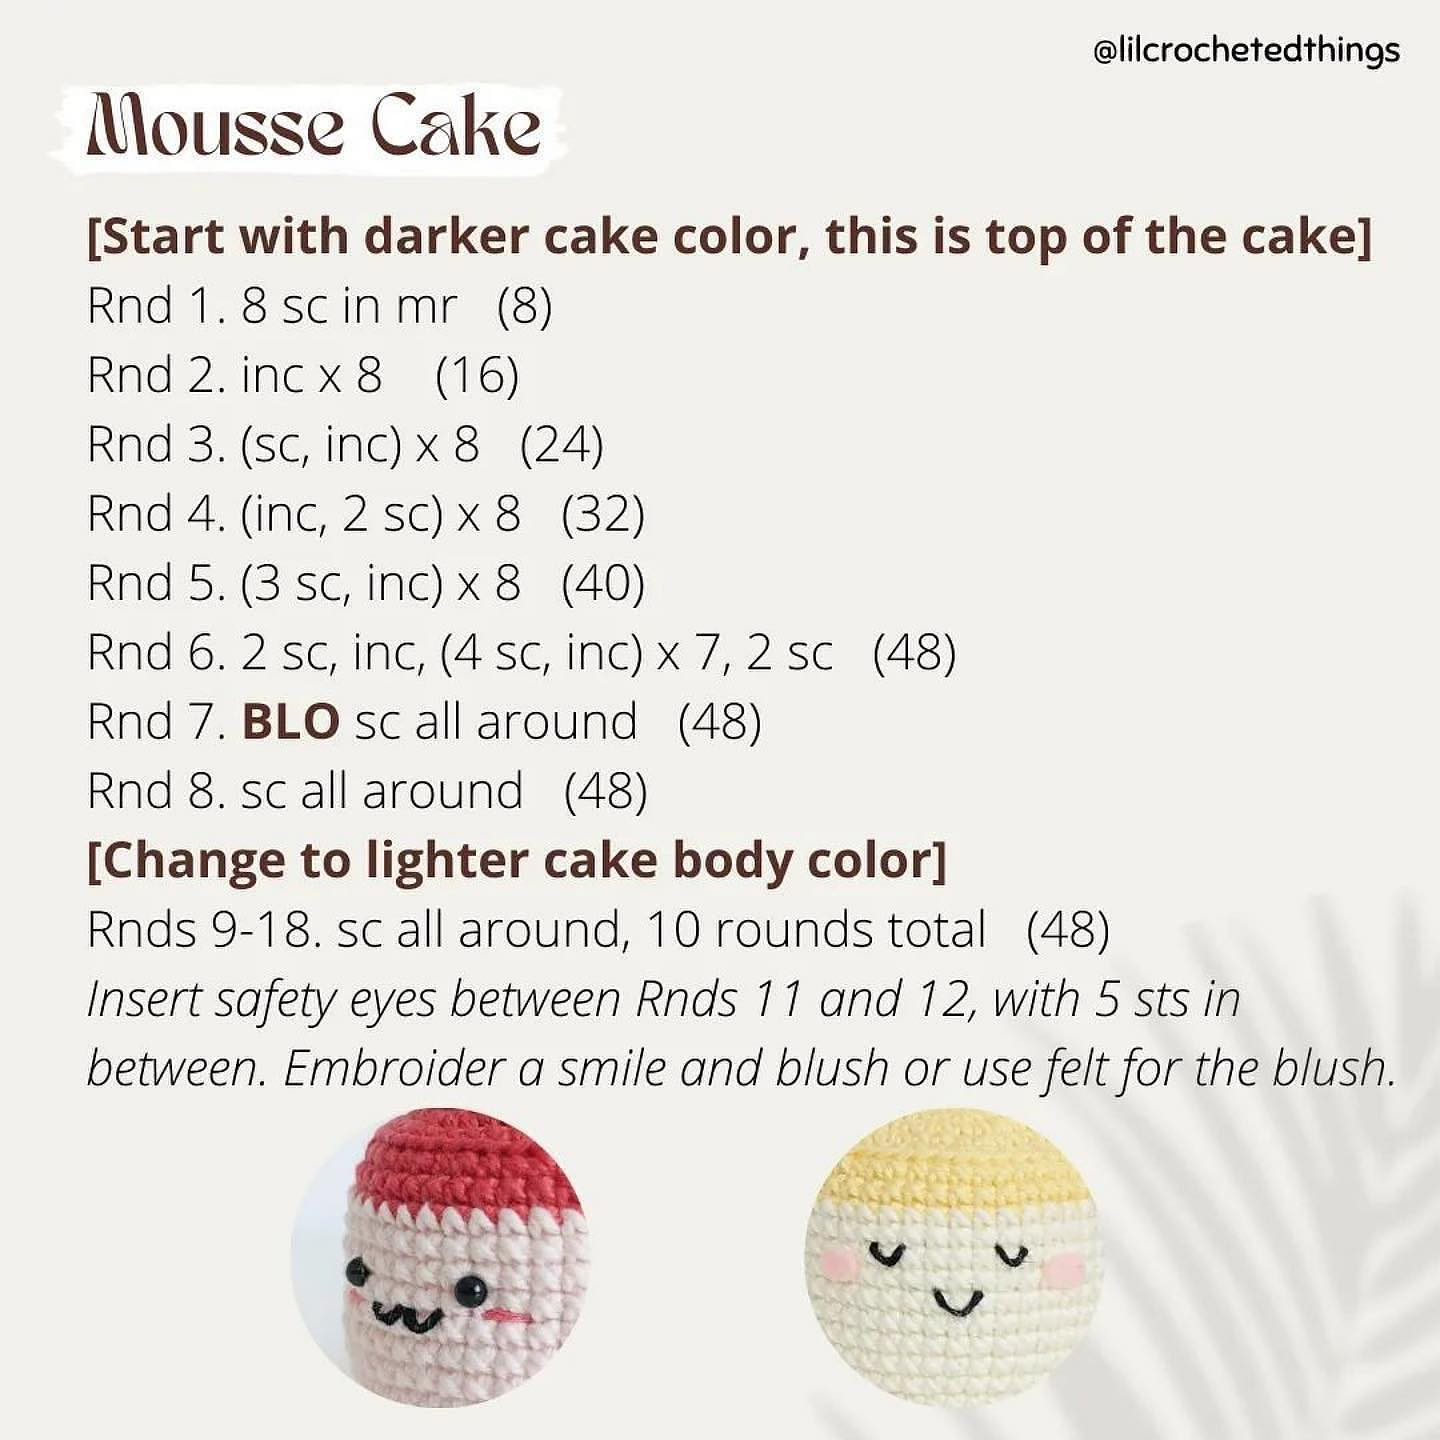 free pattern mousse cake base